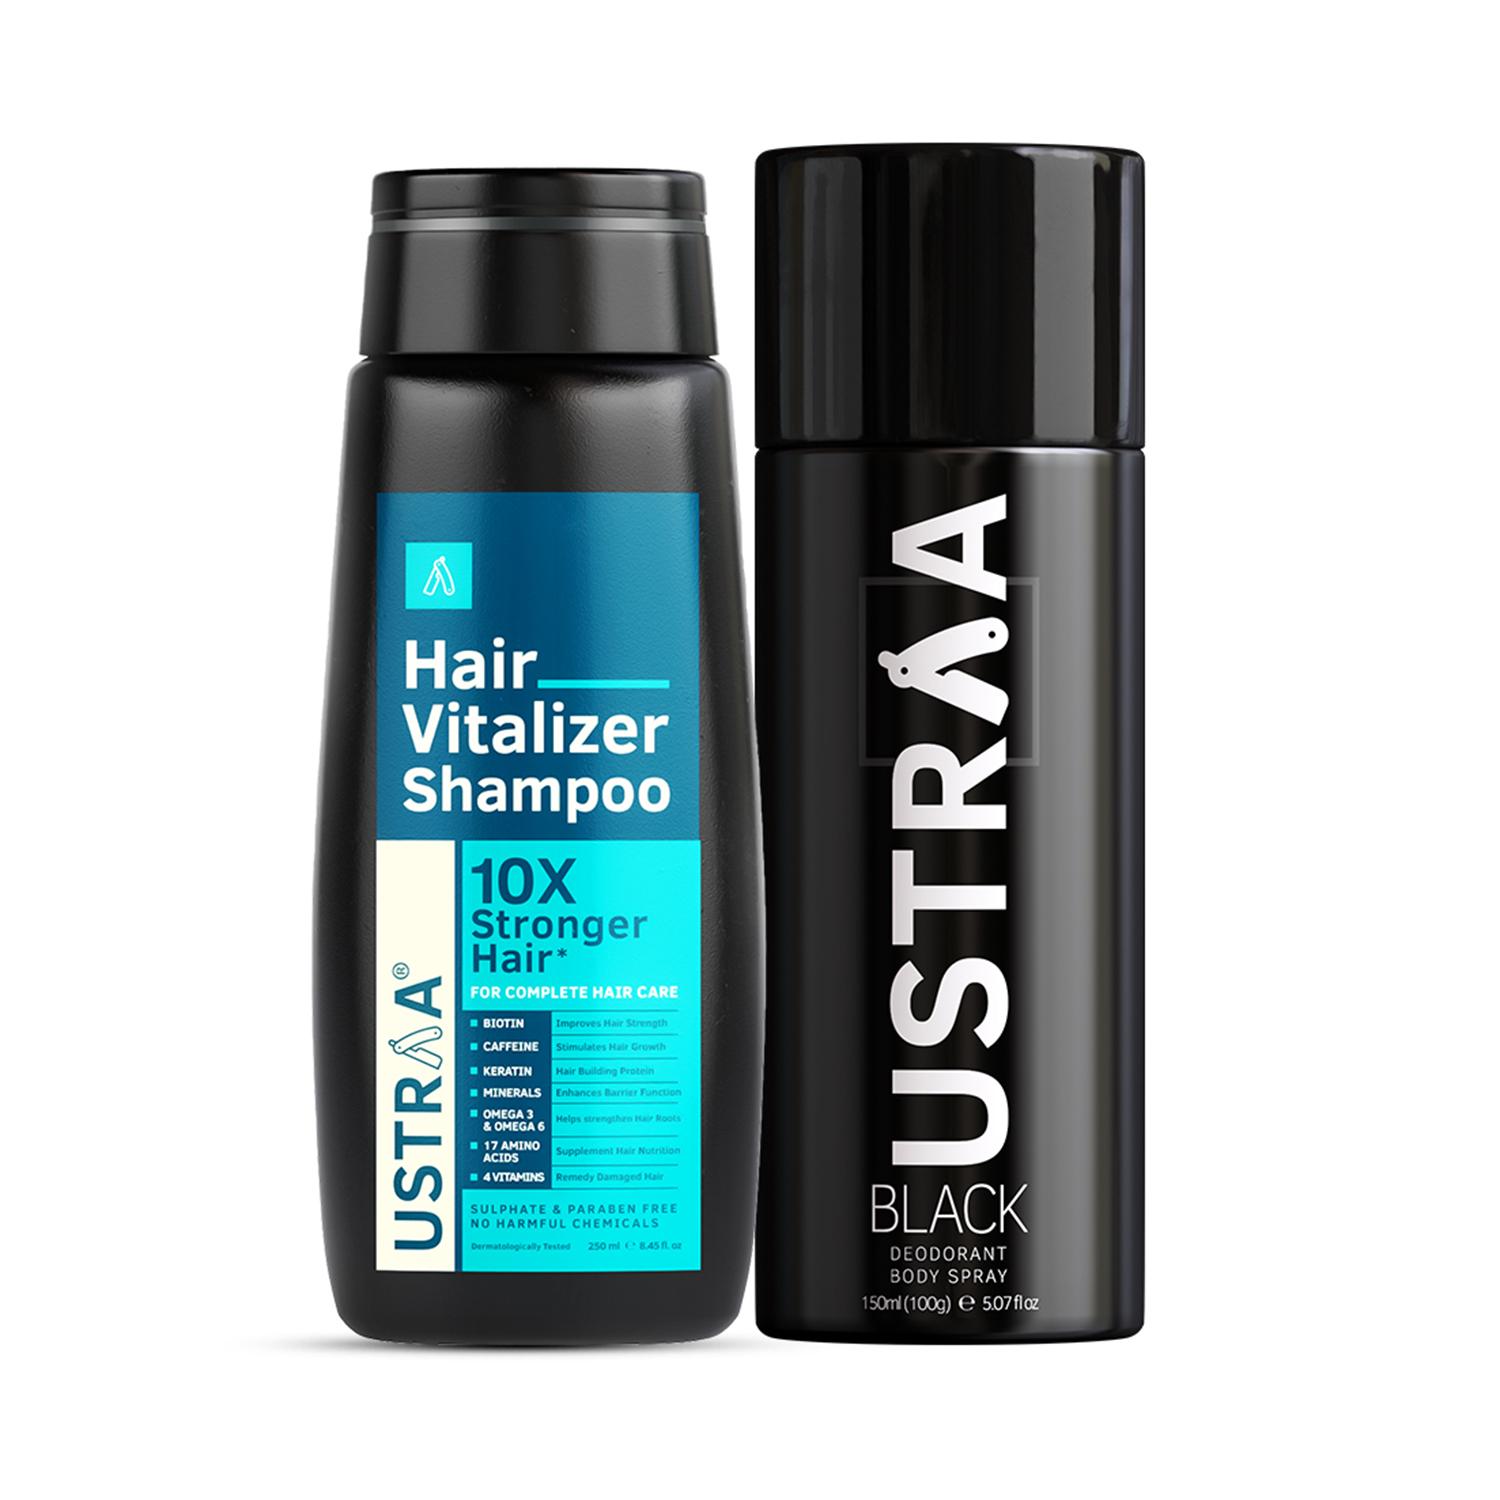 Ustraa | Ustraa Hair Vitalizer Shampoo & Black Deodorant Combo